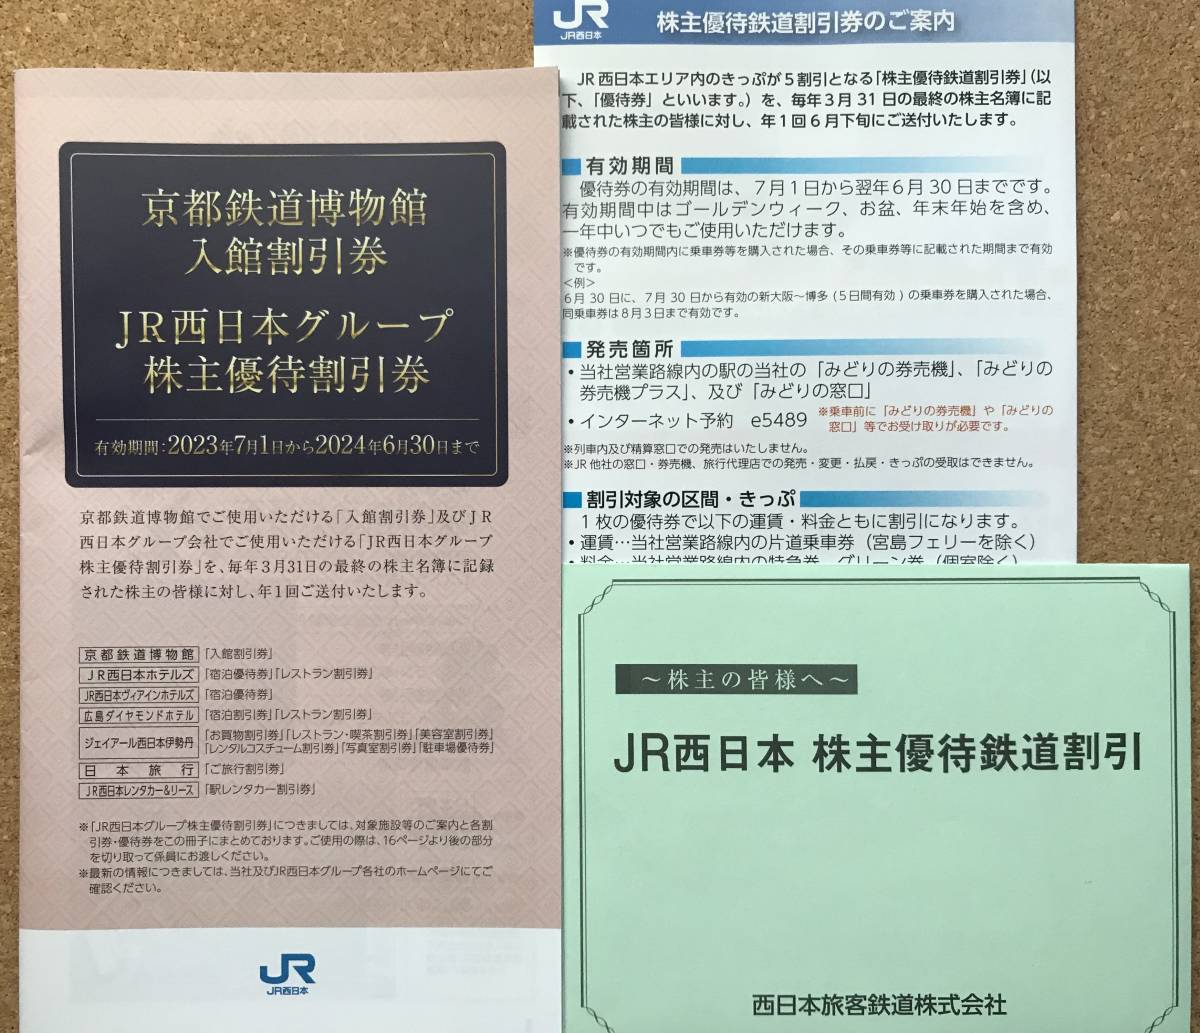 JR西日本株主優待鉄道割引券1枚グループ割引券冊子1 【送料無料